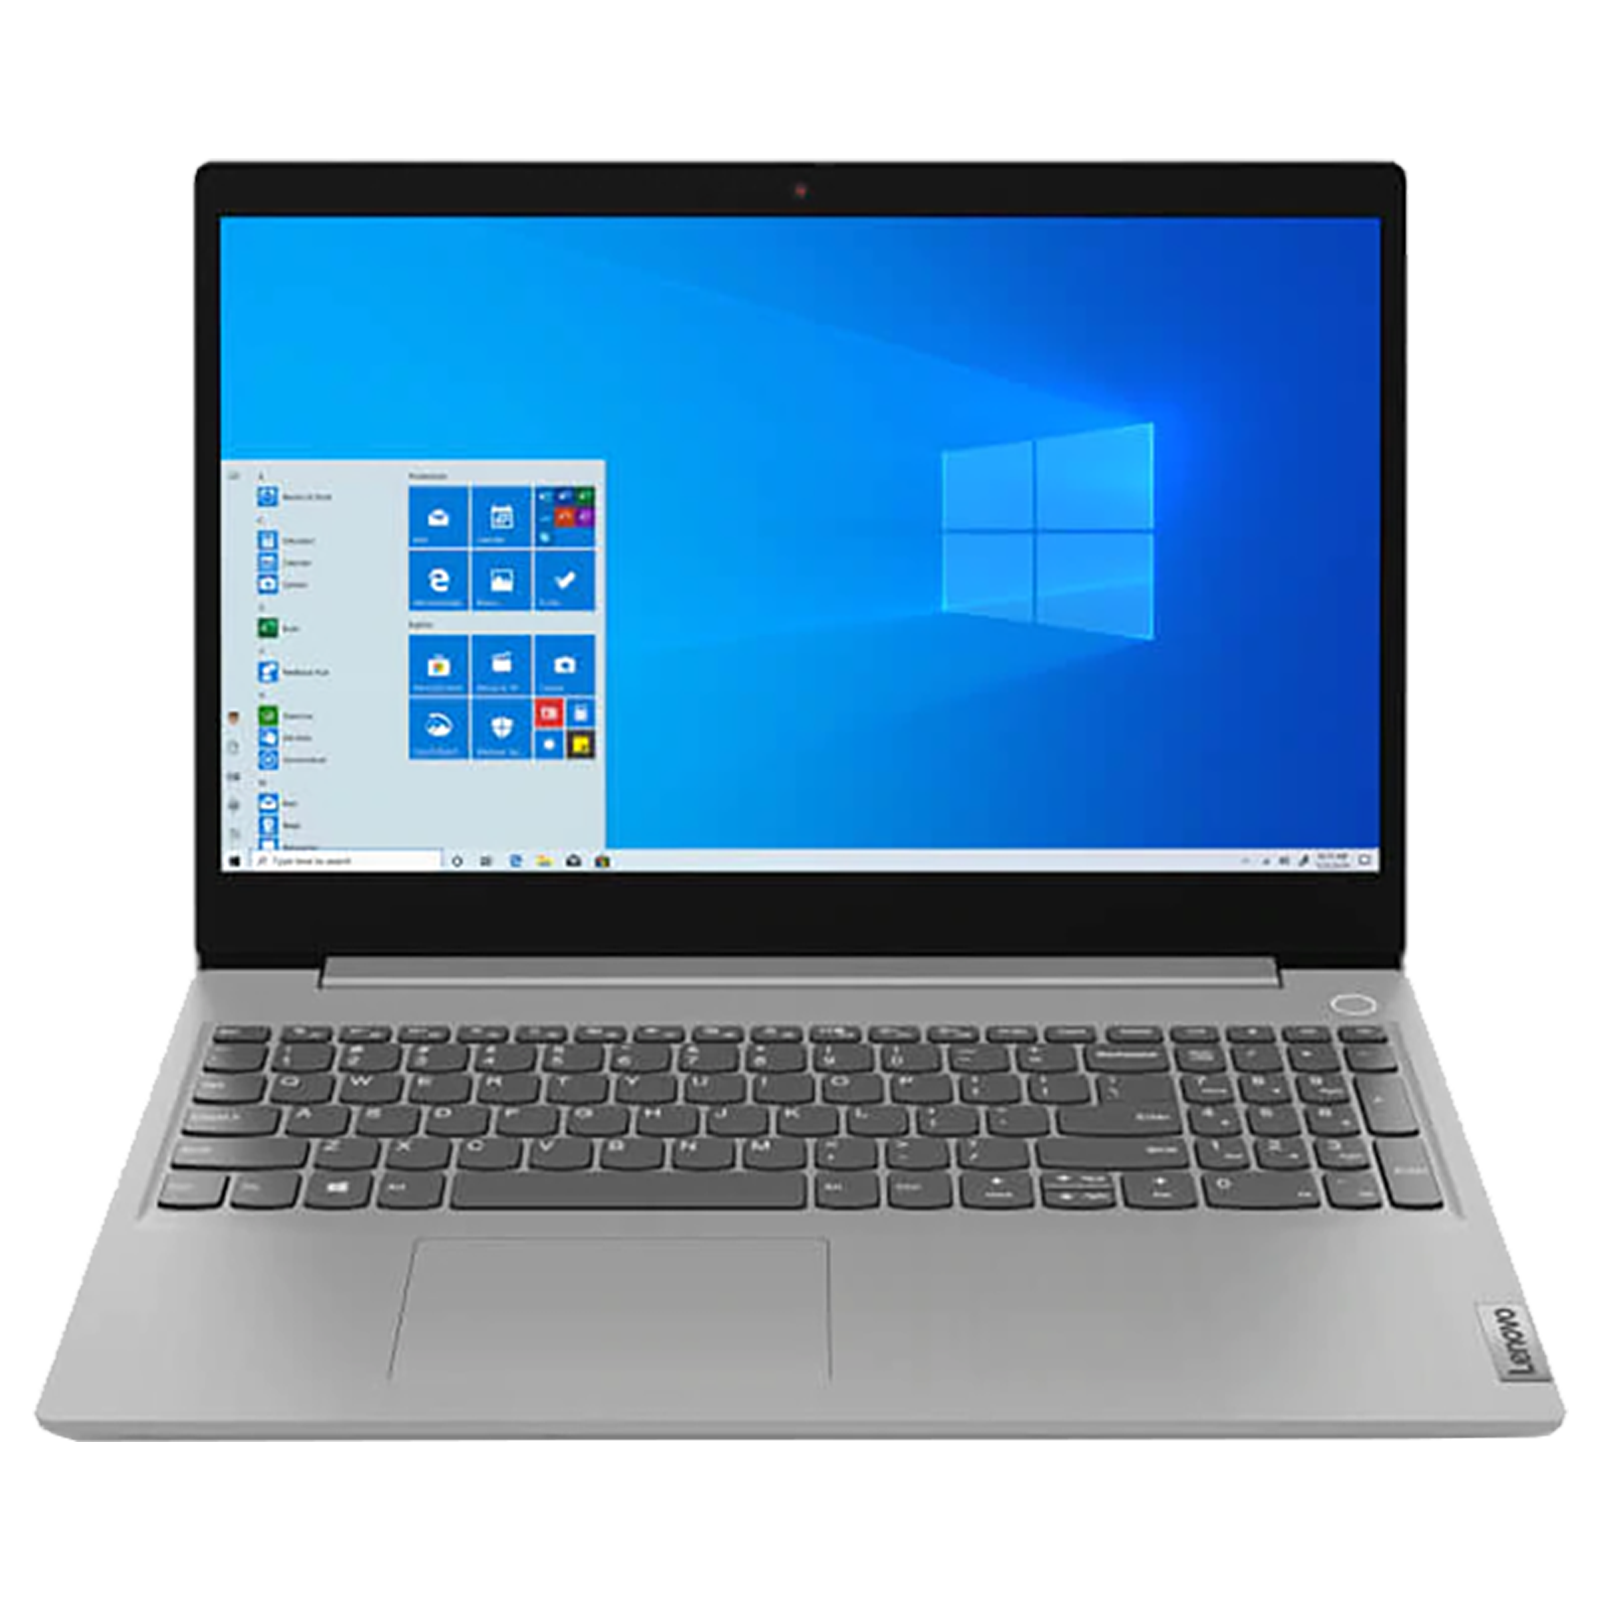 Lenovo IdeaPad 3 15IML05 (81WB0158IN) Core i3 10th Gen Windows 10 Home Thin and Light Laptop (4GB RAM, 256GB SSD, Intel UHD Graphics, MS Office,…